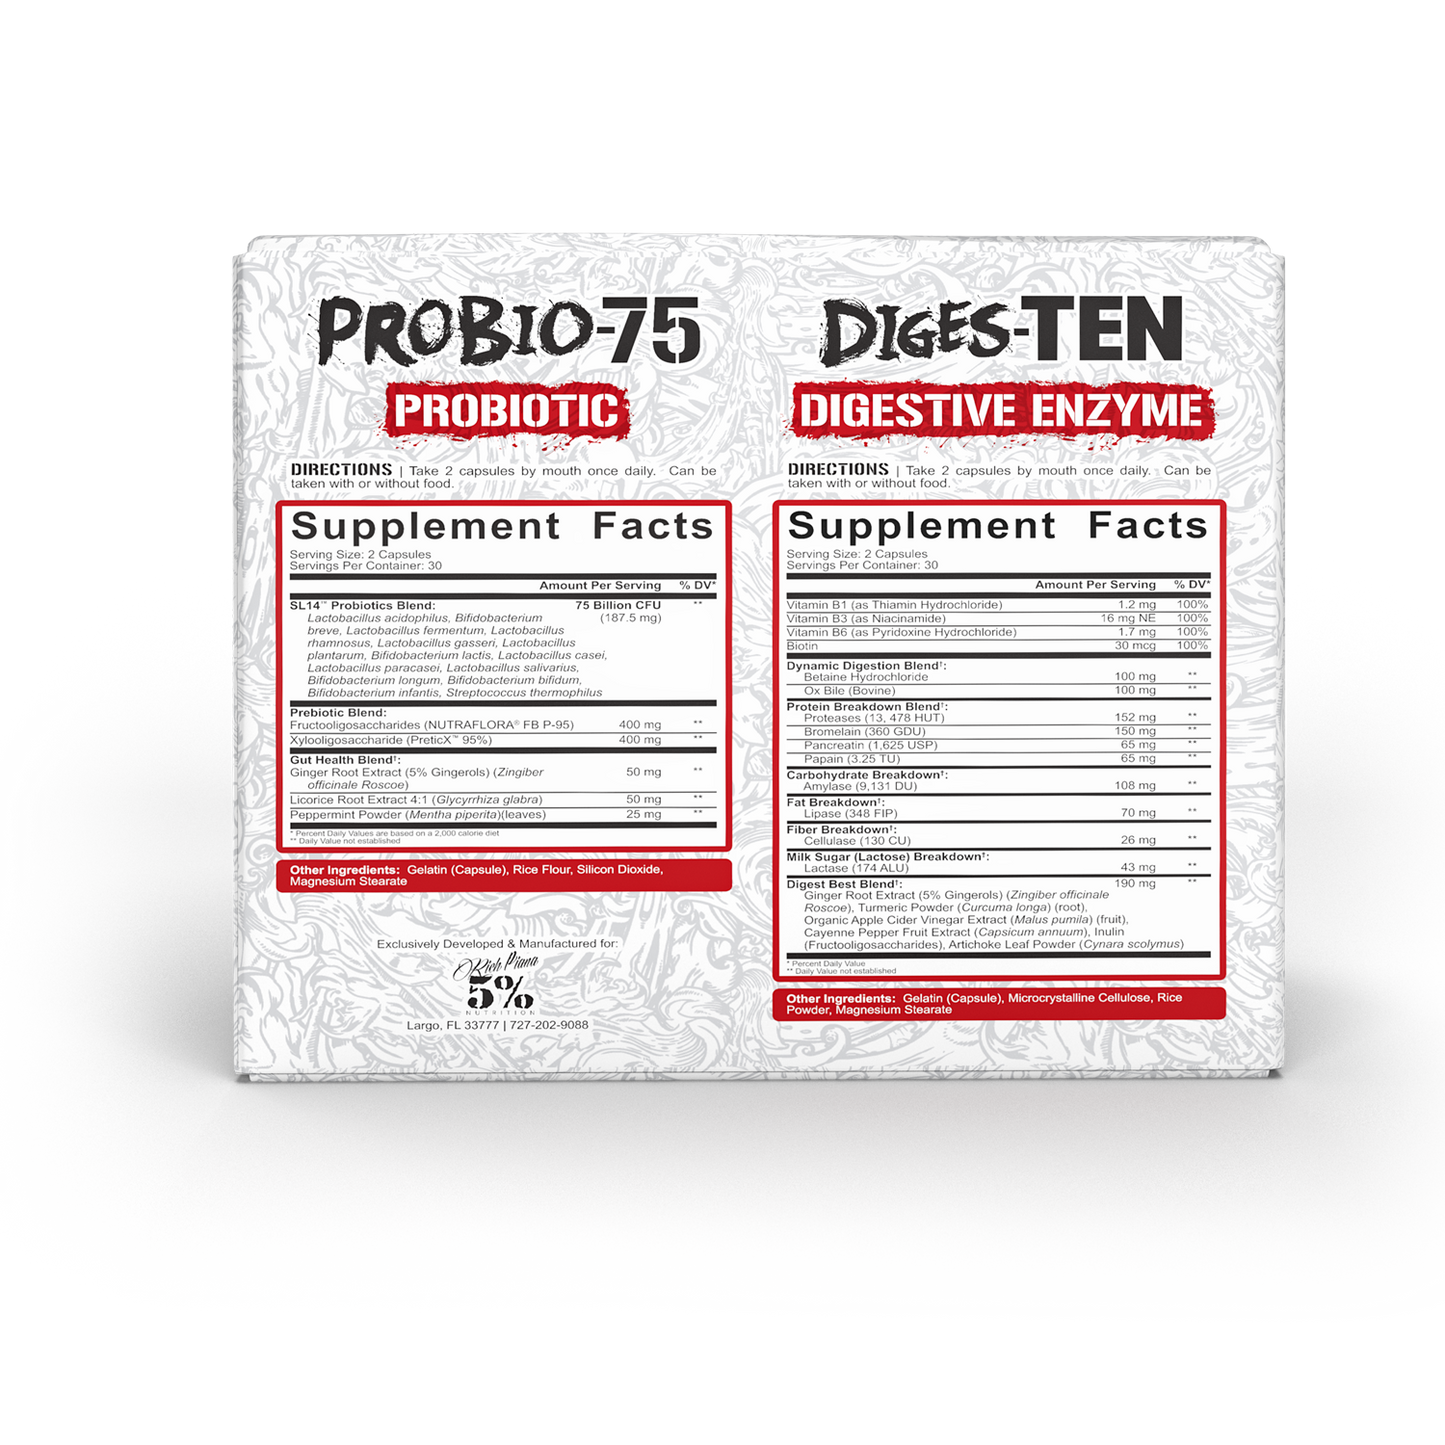 Rich Piana Digestive Defender Pack (Digestive Enzyme - Probiotic)